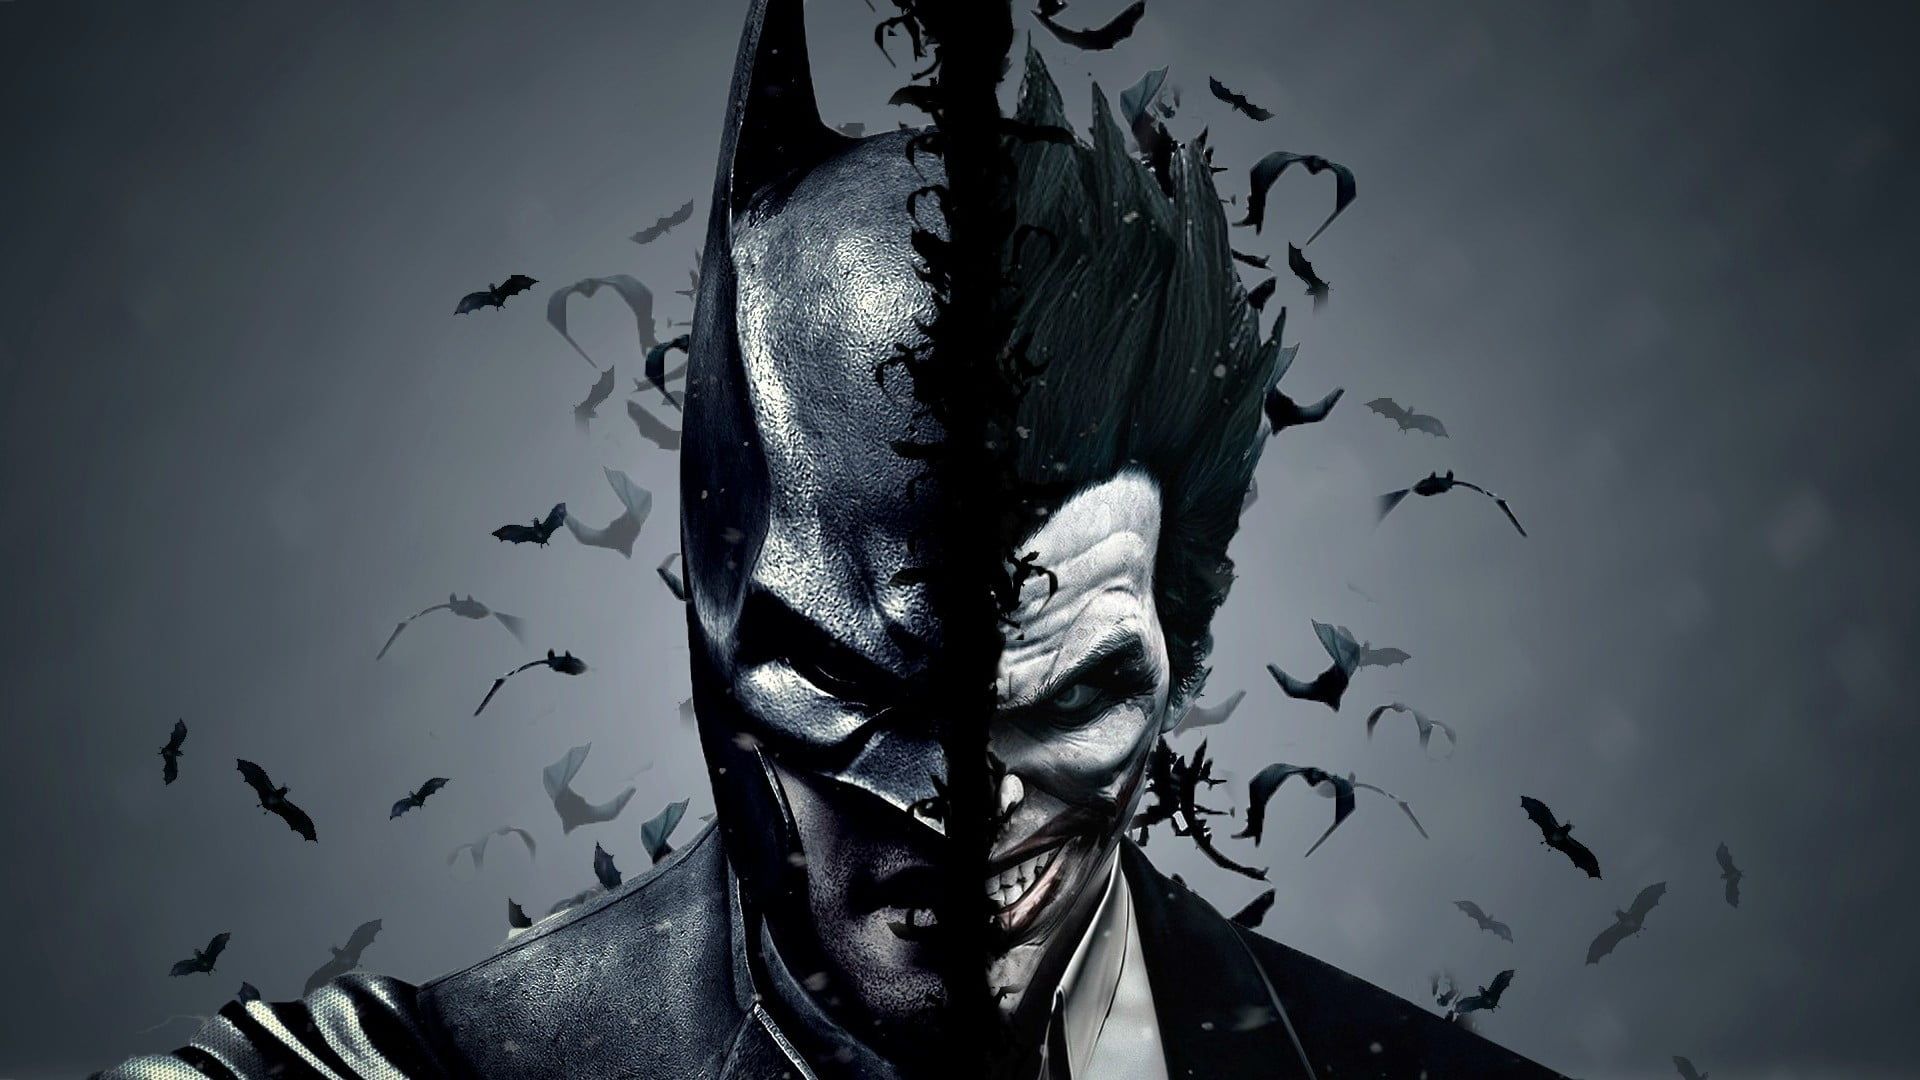 Batman and Joker illustration #Batman #Joker Batman: Arkham Origins P # wallpaper #hdwallpaper #desktop. Batman wallpaper, Joker wallpaper, Batman